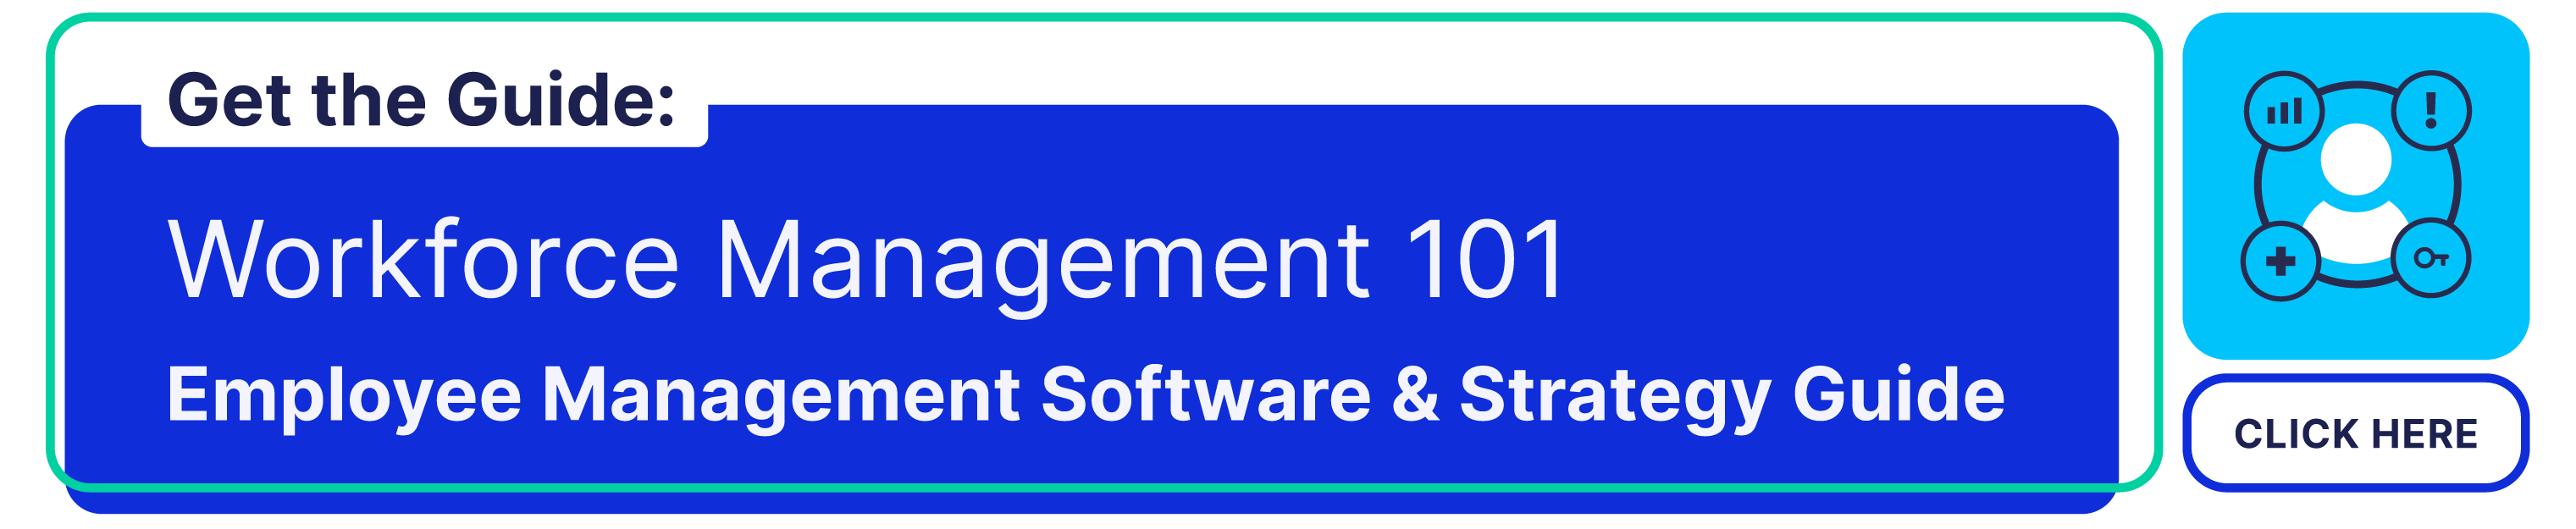 Workforce Management Software Banner